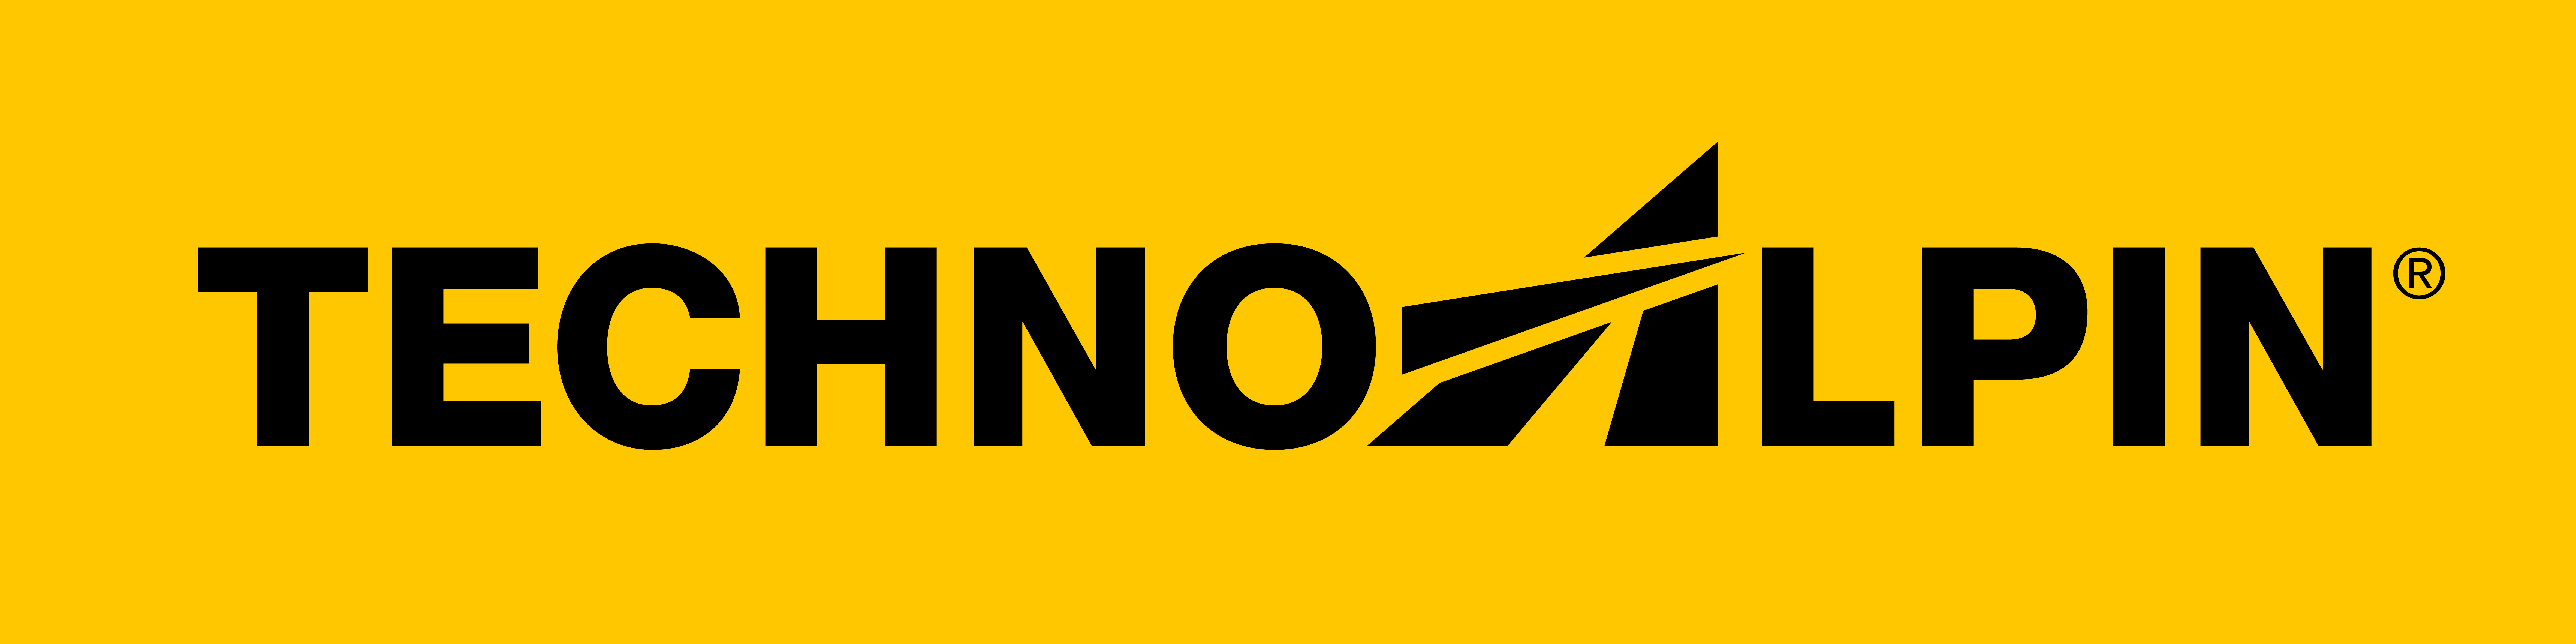 TechnoAlpin Logo - 2018 - positiv + yellow